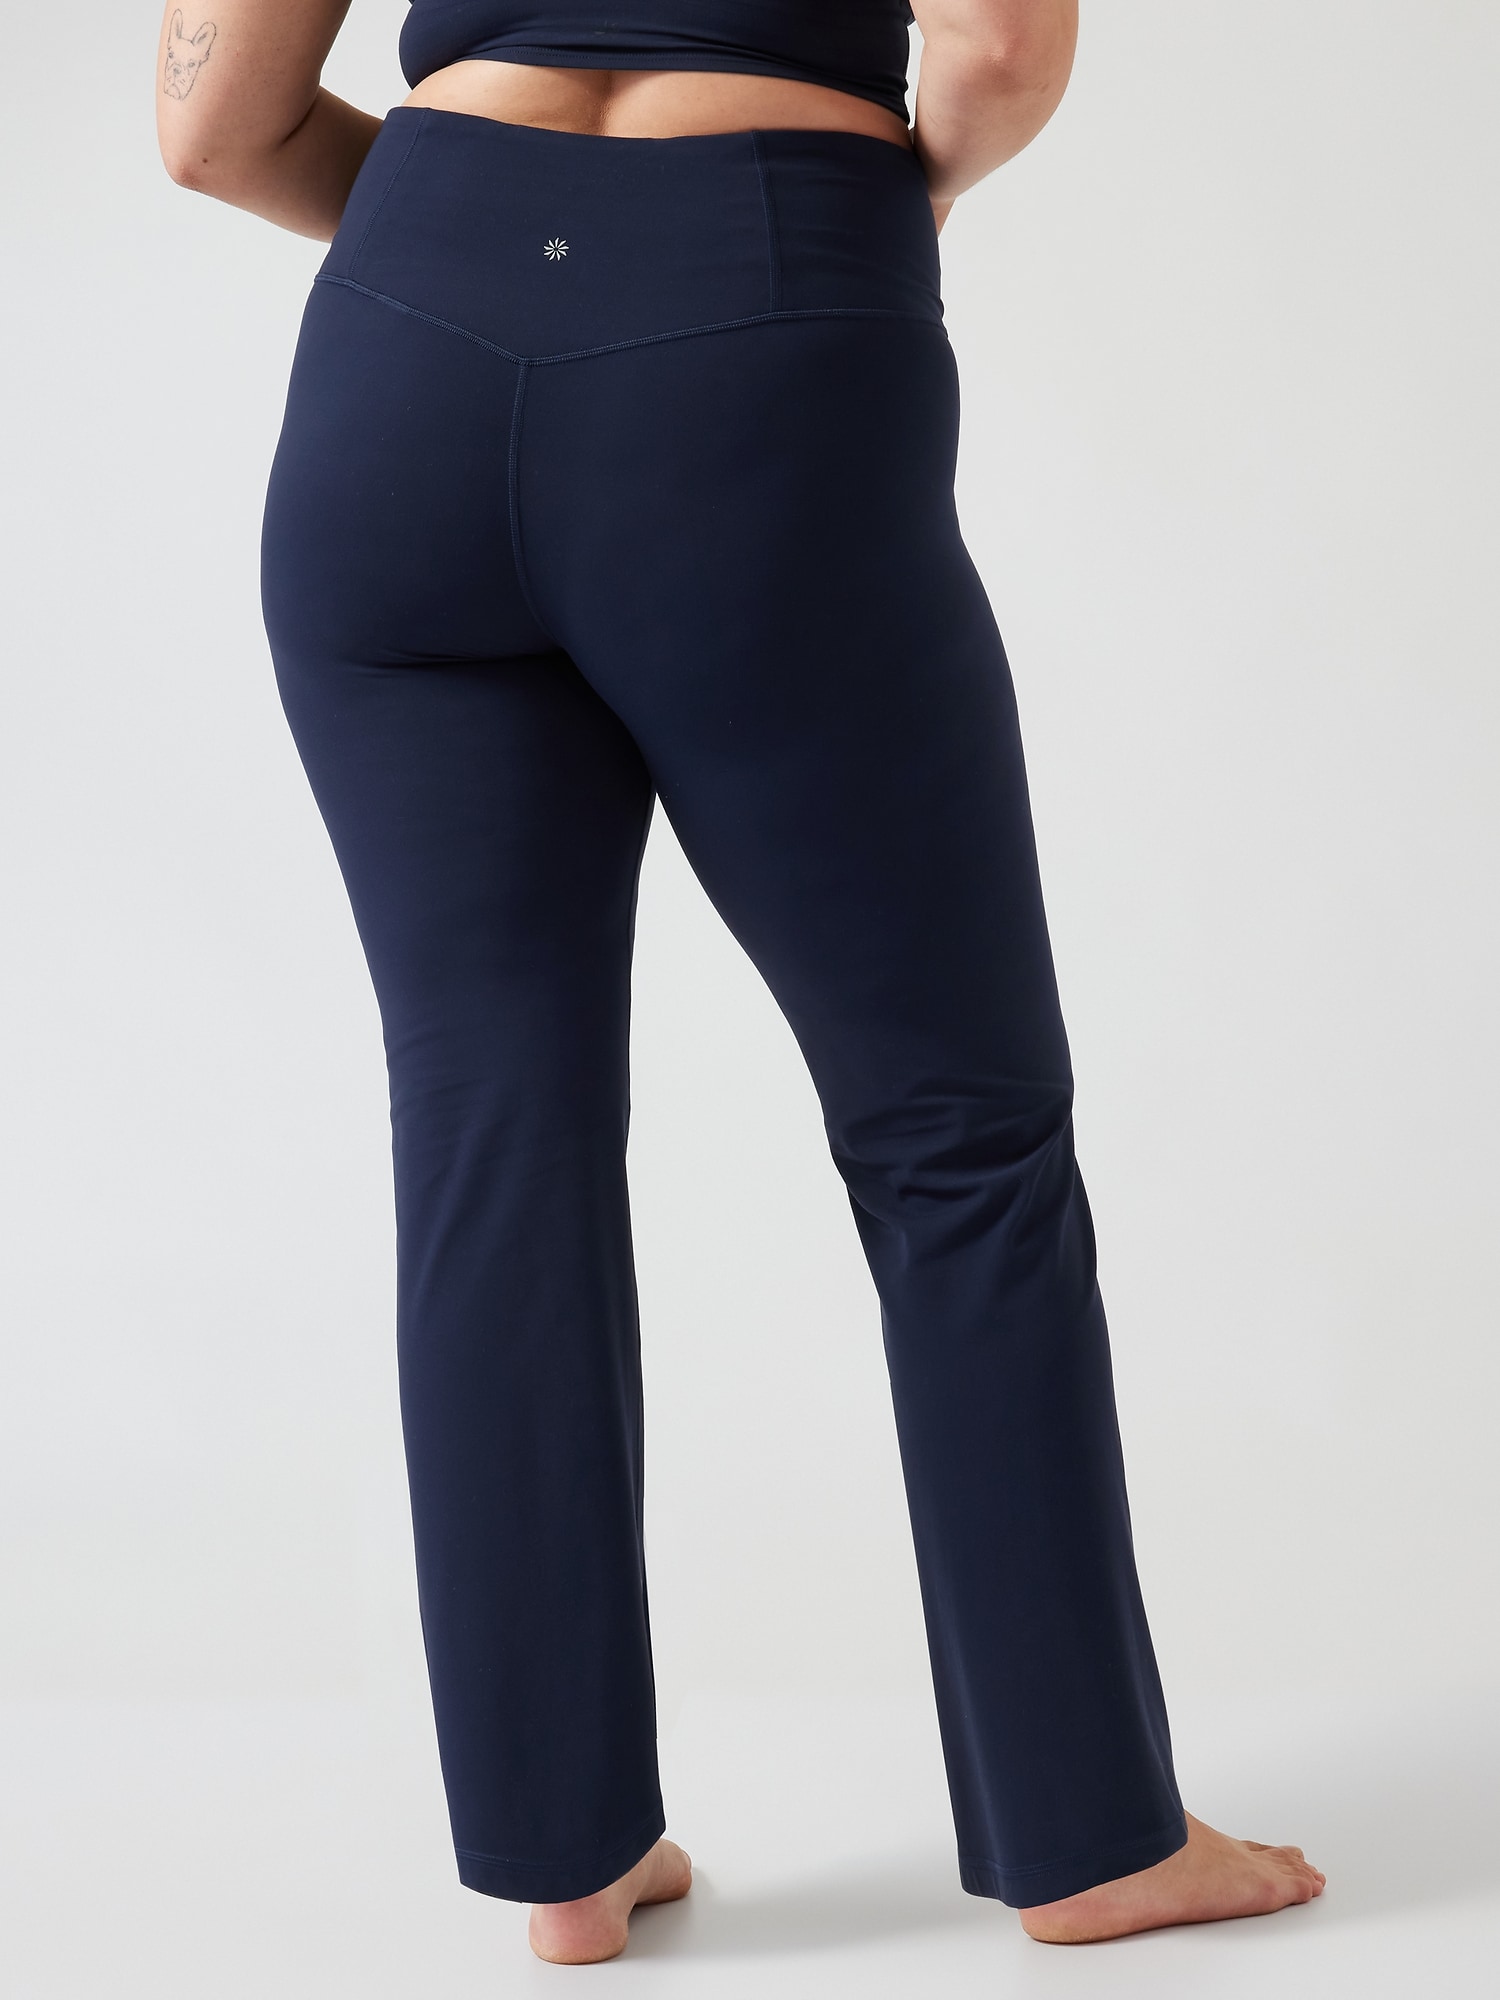 Athleta Womens XS Navy Blue Yoga Pants Straight Leg Back Pockets Leggings  C17